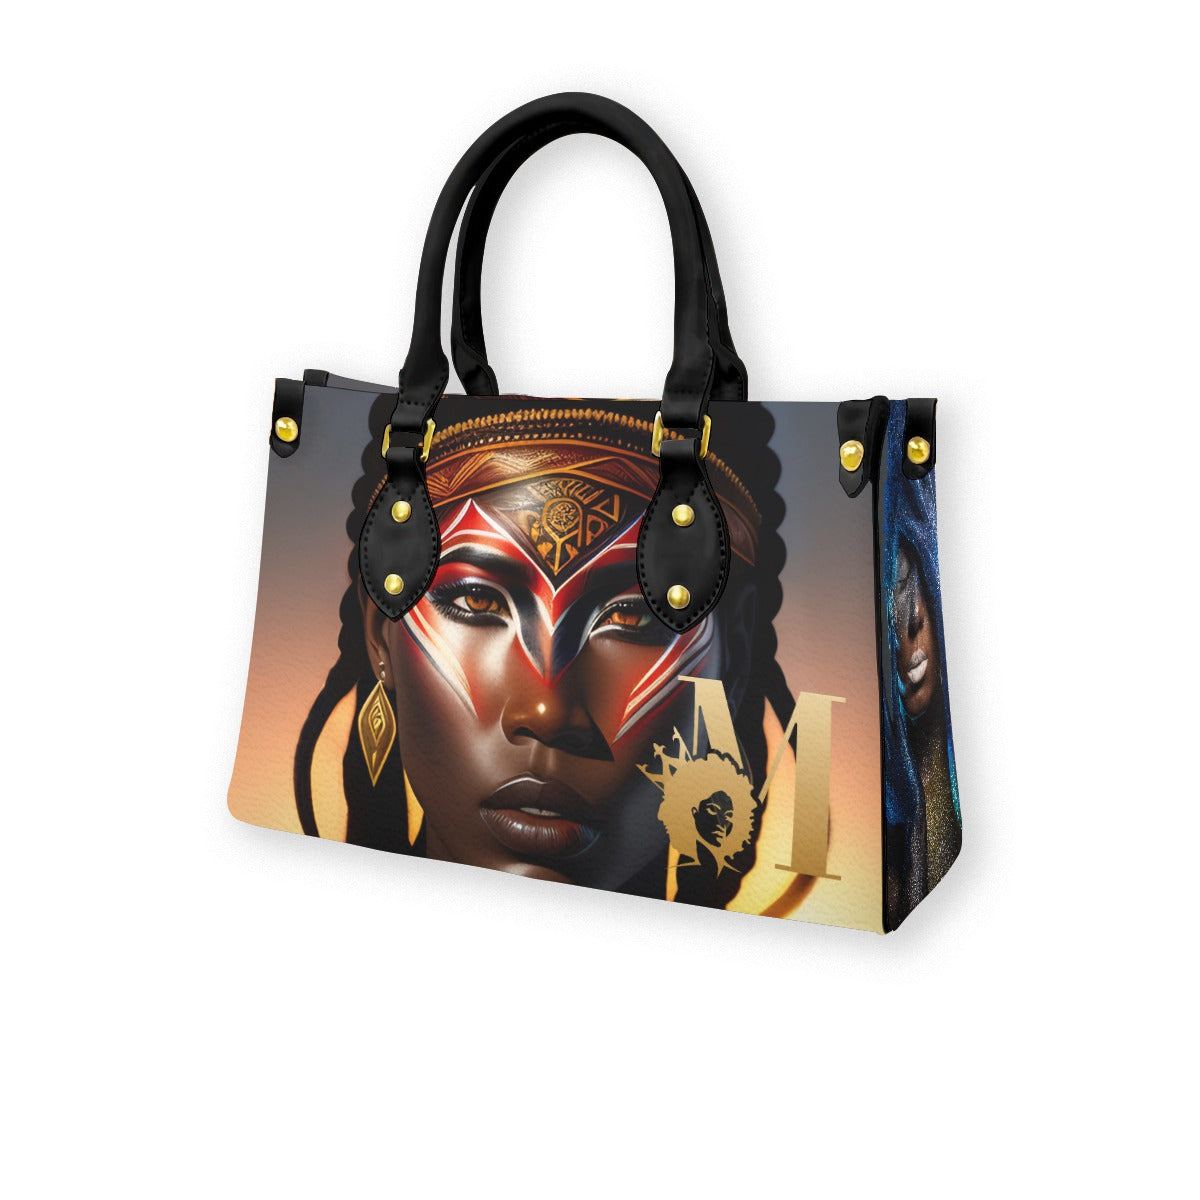 Warrior by Melanin Queen - Women's Tote Bag With Black Handle